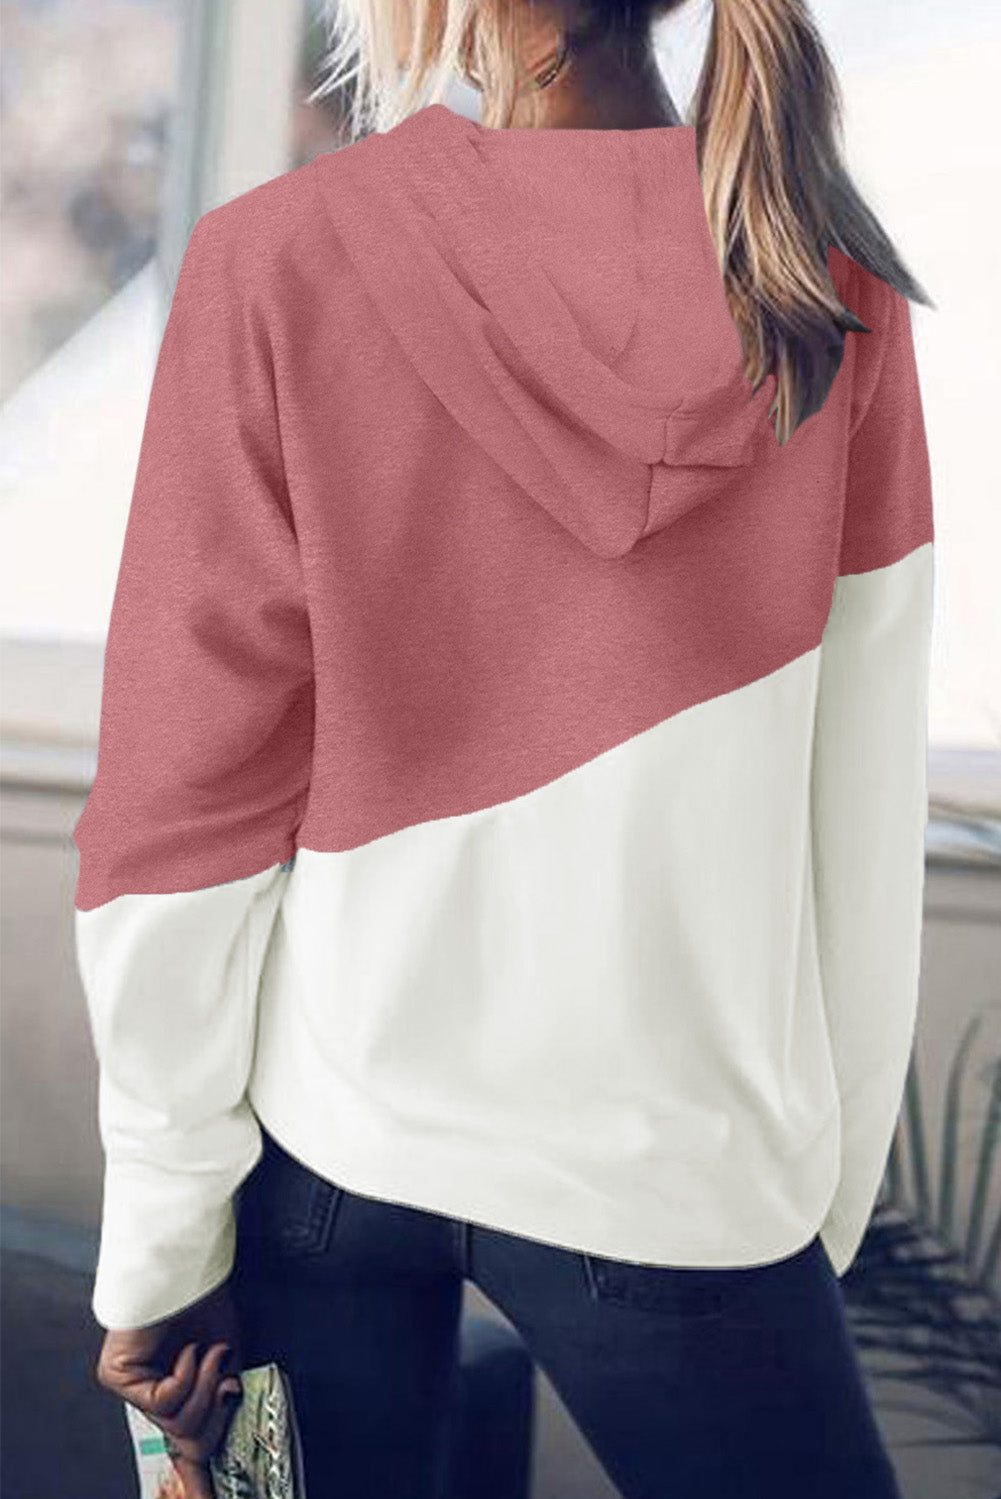 LC8511695-10-S, LC8511695-10-M, LC8511695-10-L, LC8511695-10-XL, LC8511695-10-2XL, Pink Hoodies for Women Asymmetric Color Block Hooded Sweatshirt Jacket